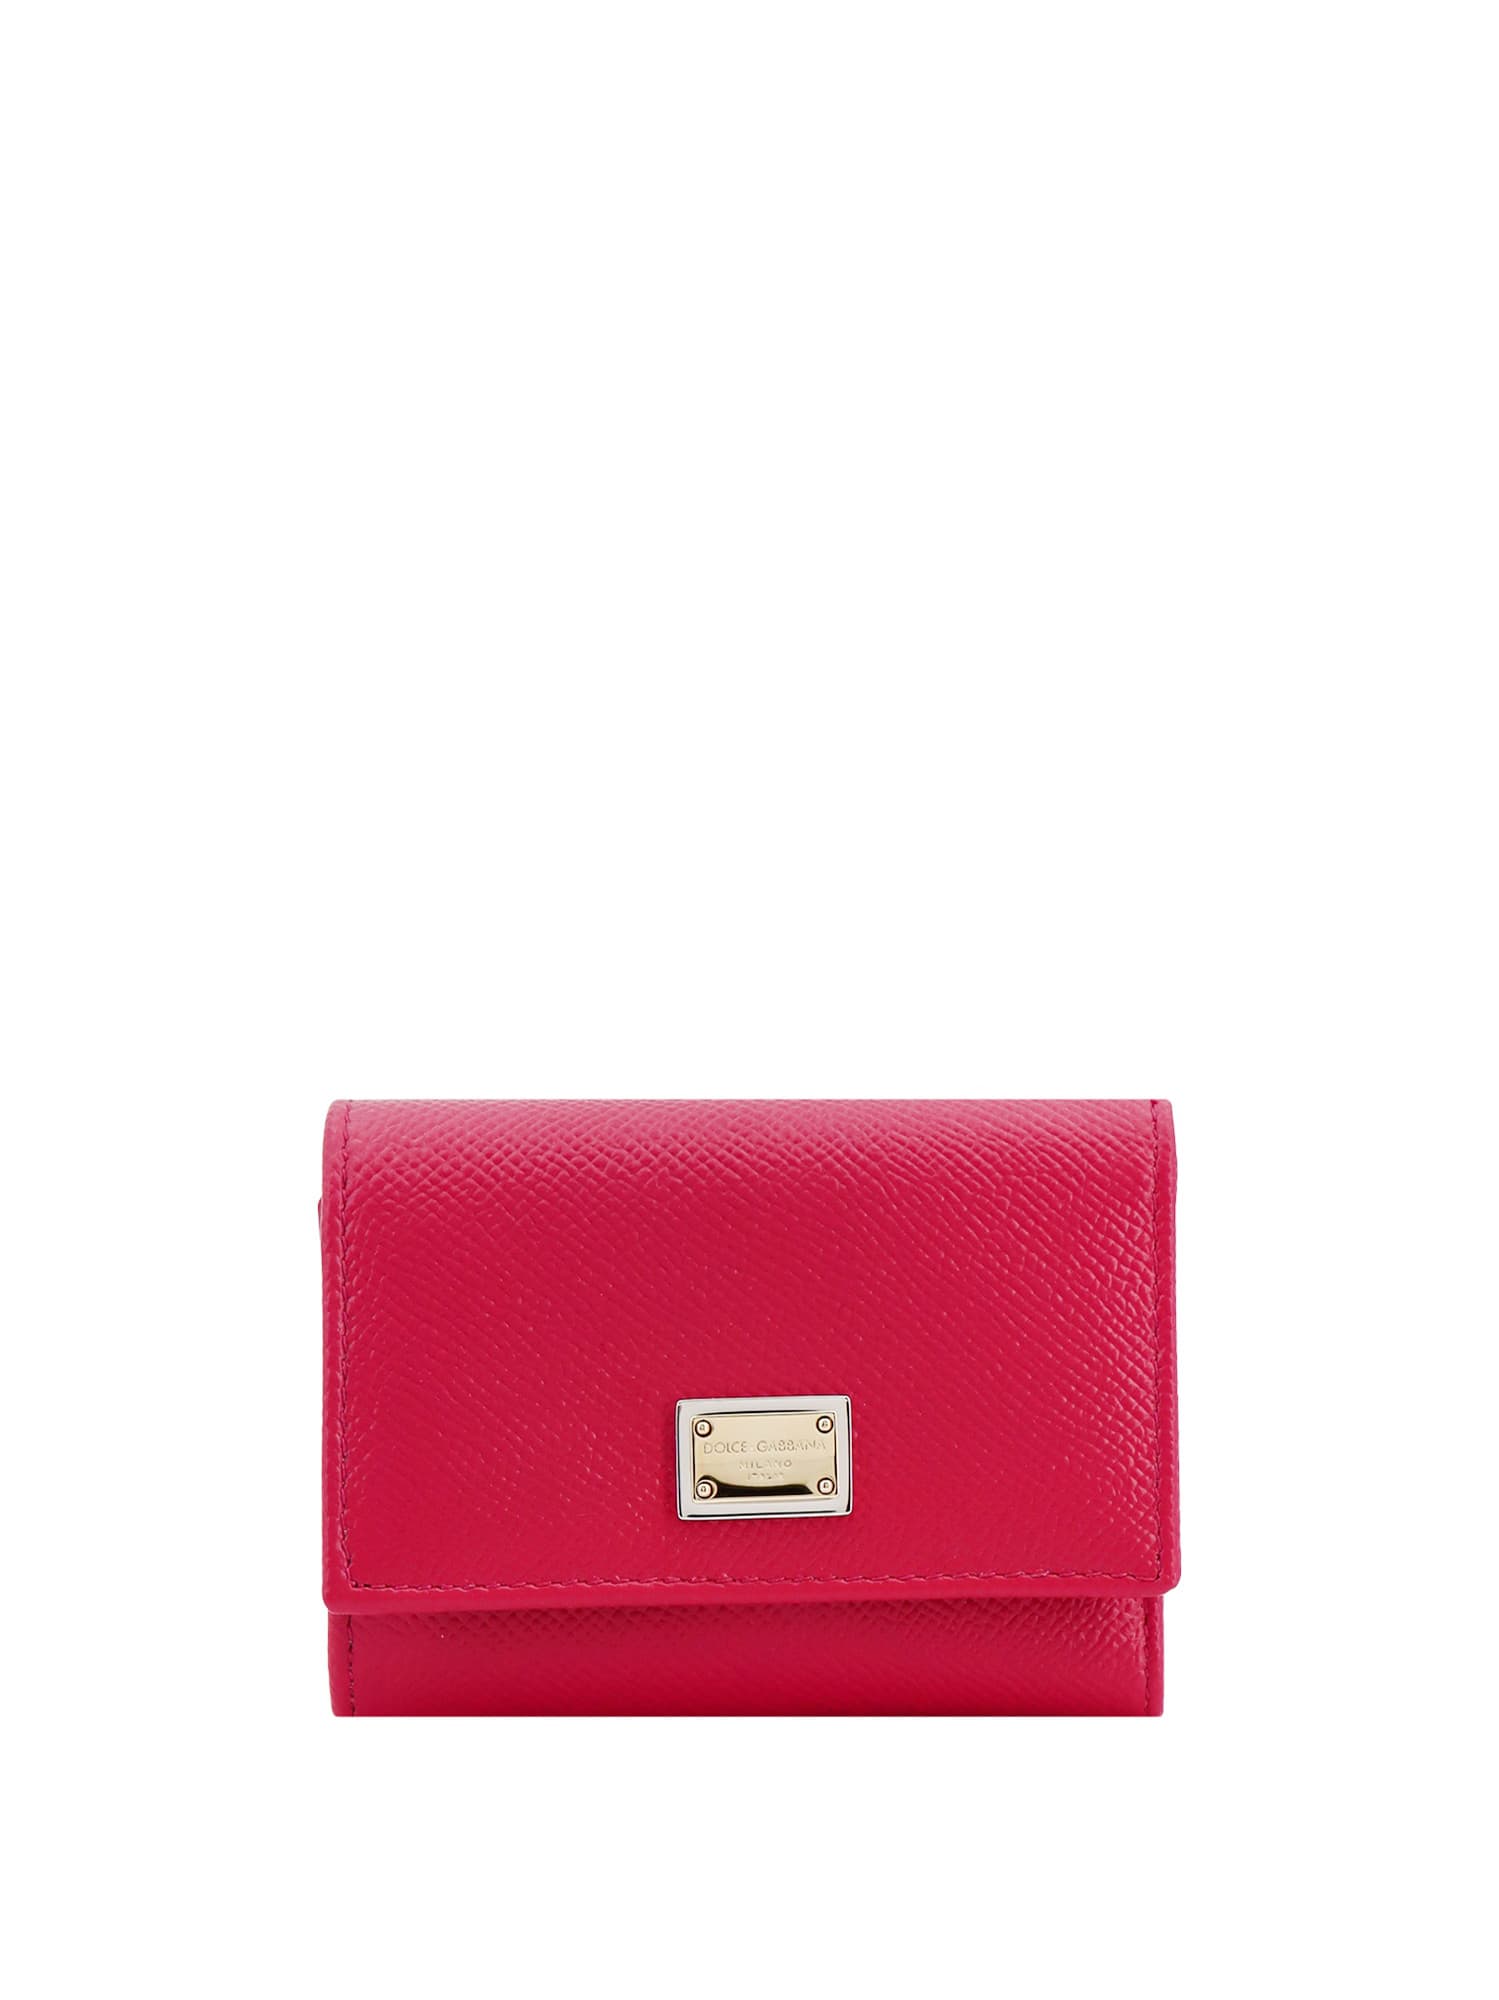 Dolce & Gabbana Wallet In Red